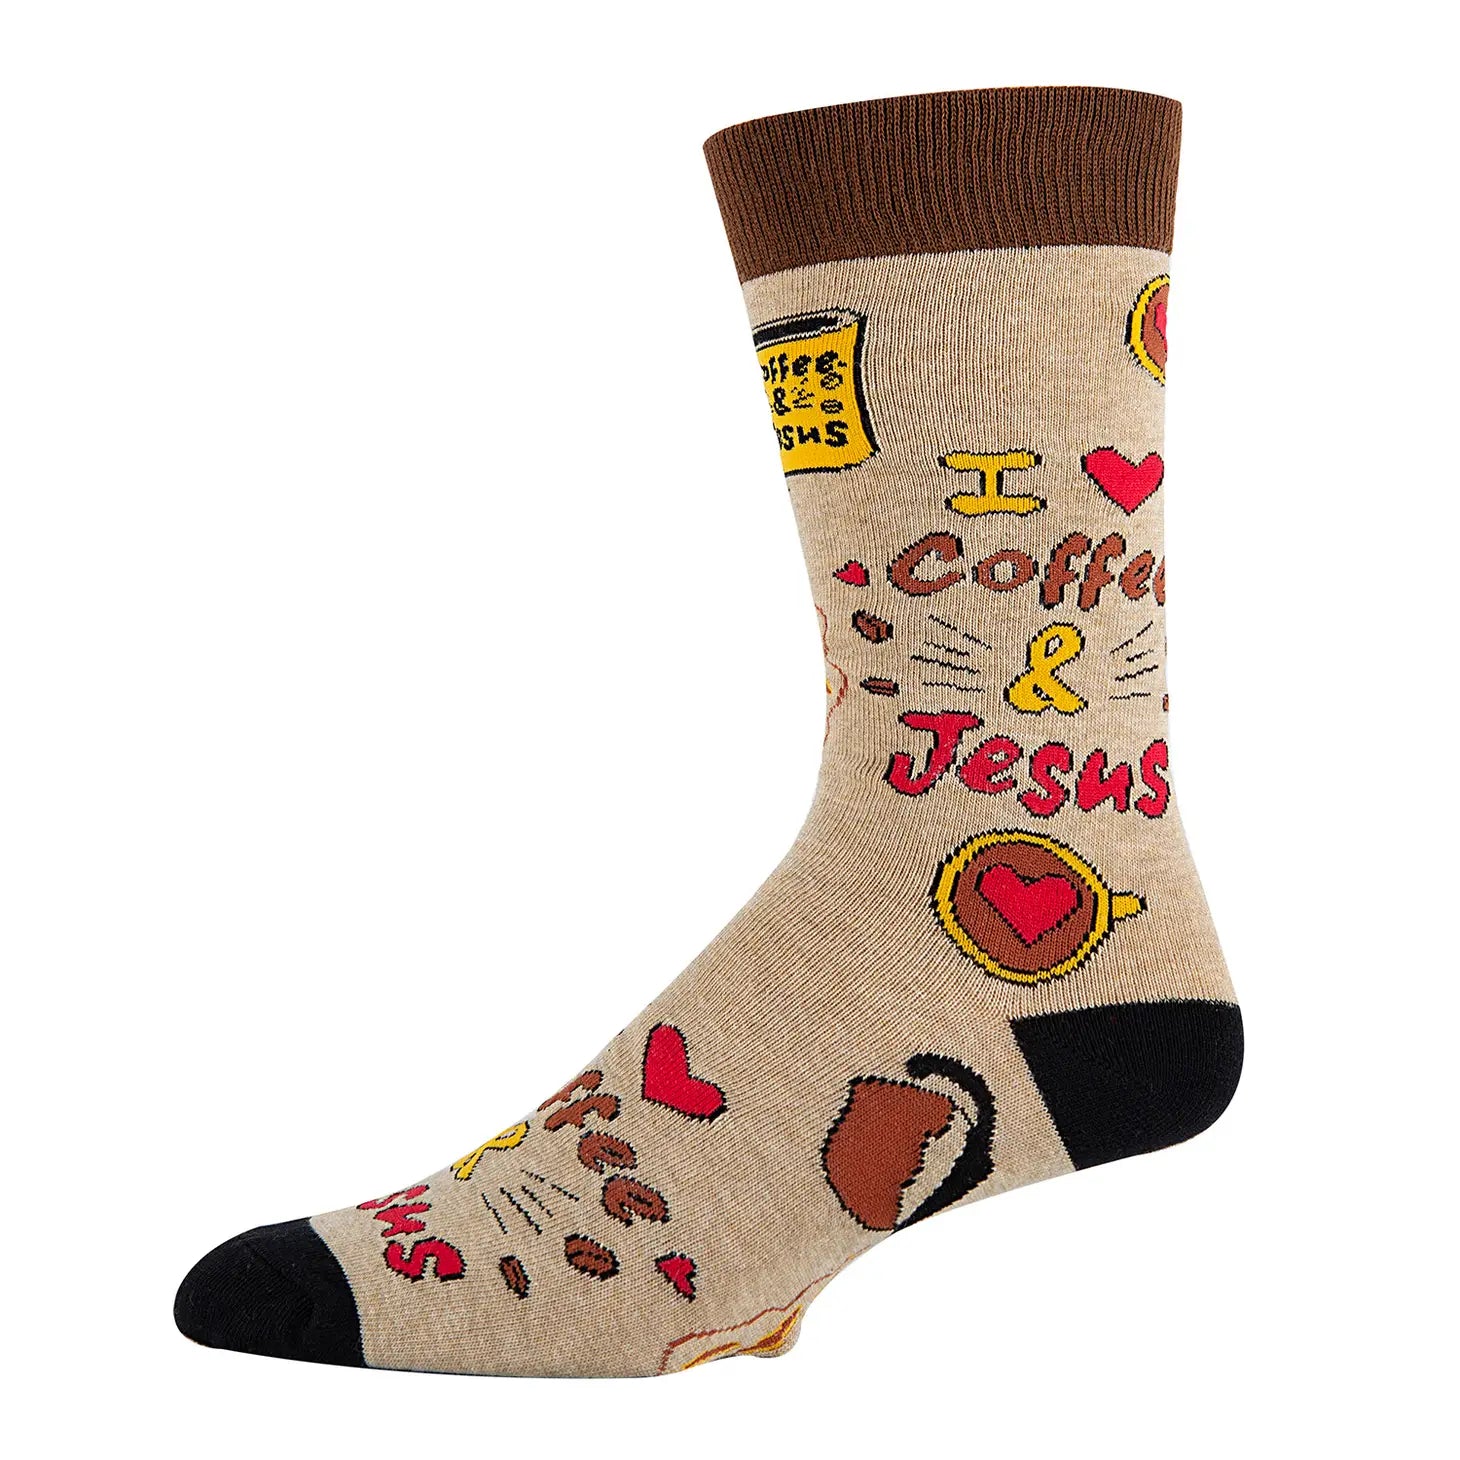 JY Designs & Creation - Socks Coffee & Jesus